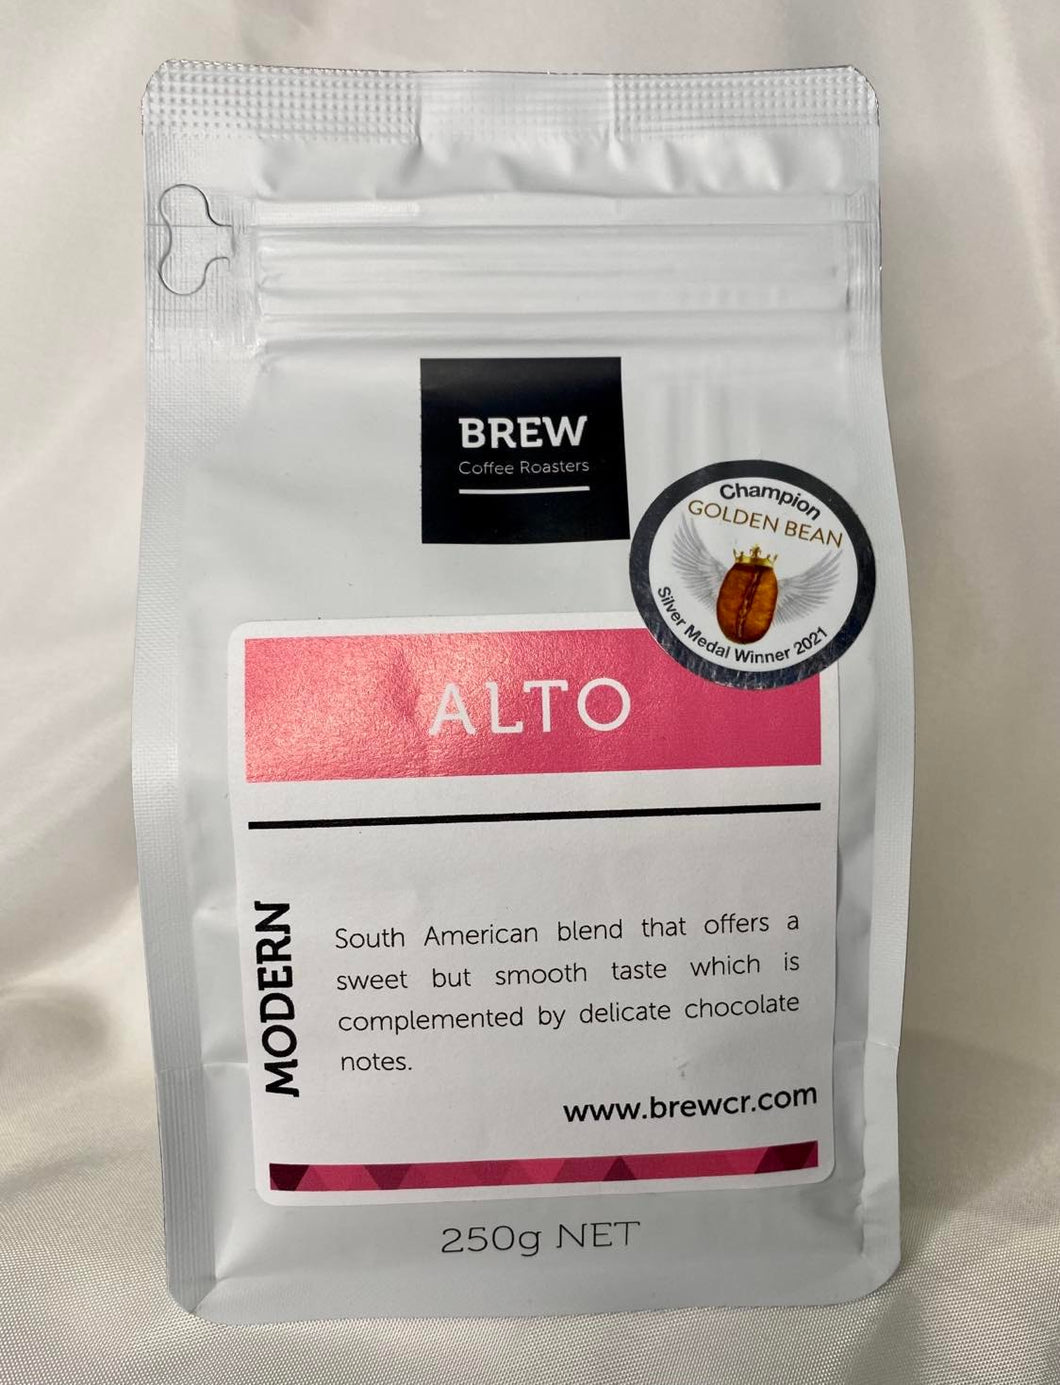 Brew Coffee ALTO Coffee Beans